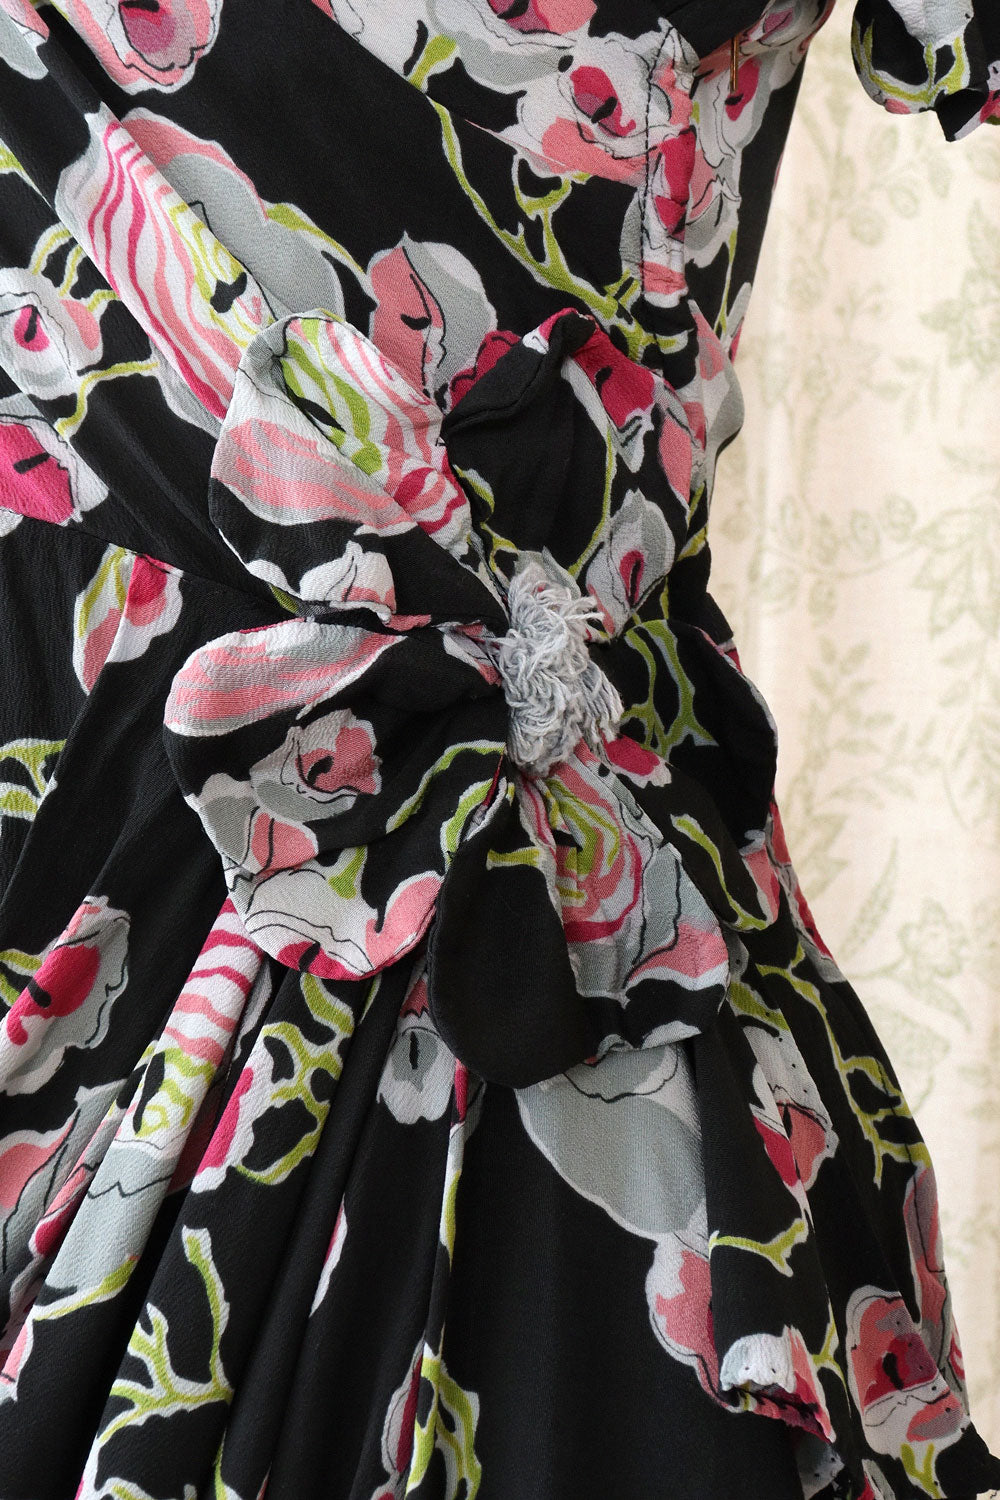 1940s Romantic Rayon Painterly Dress M